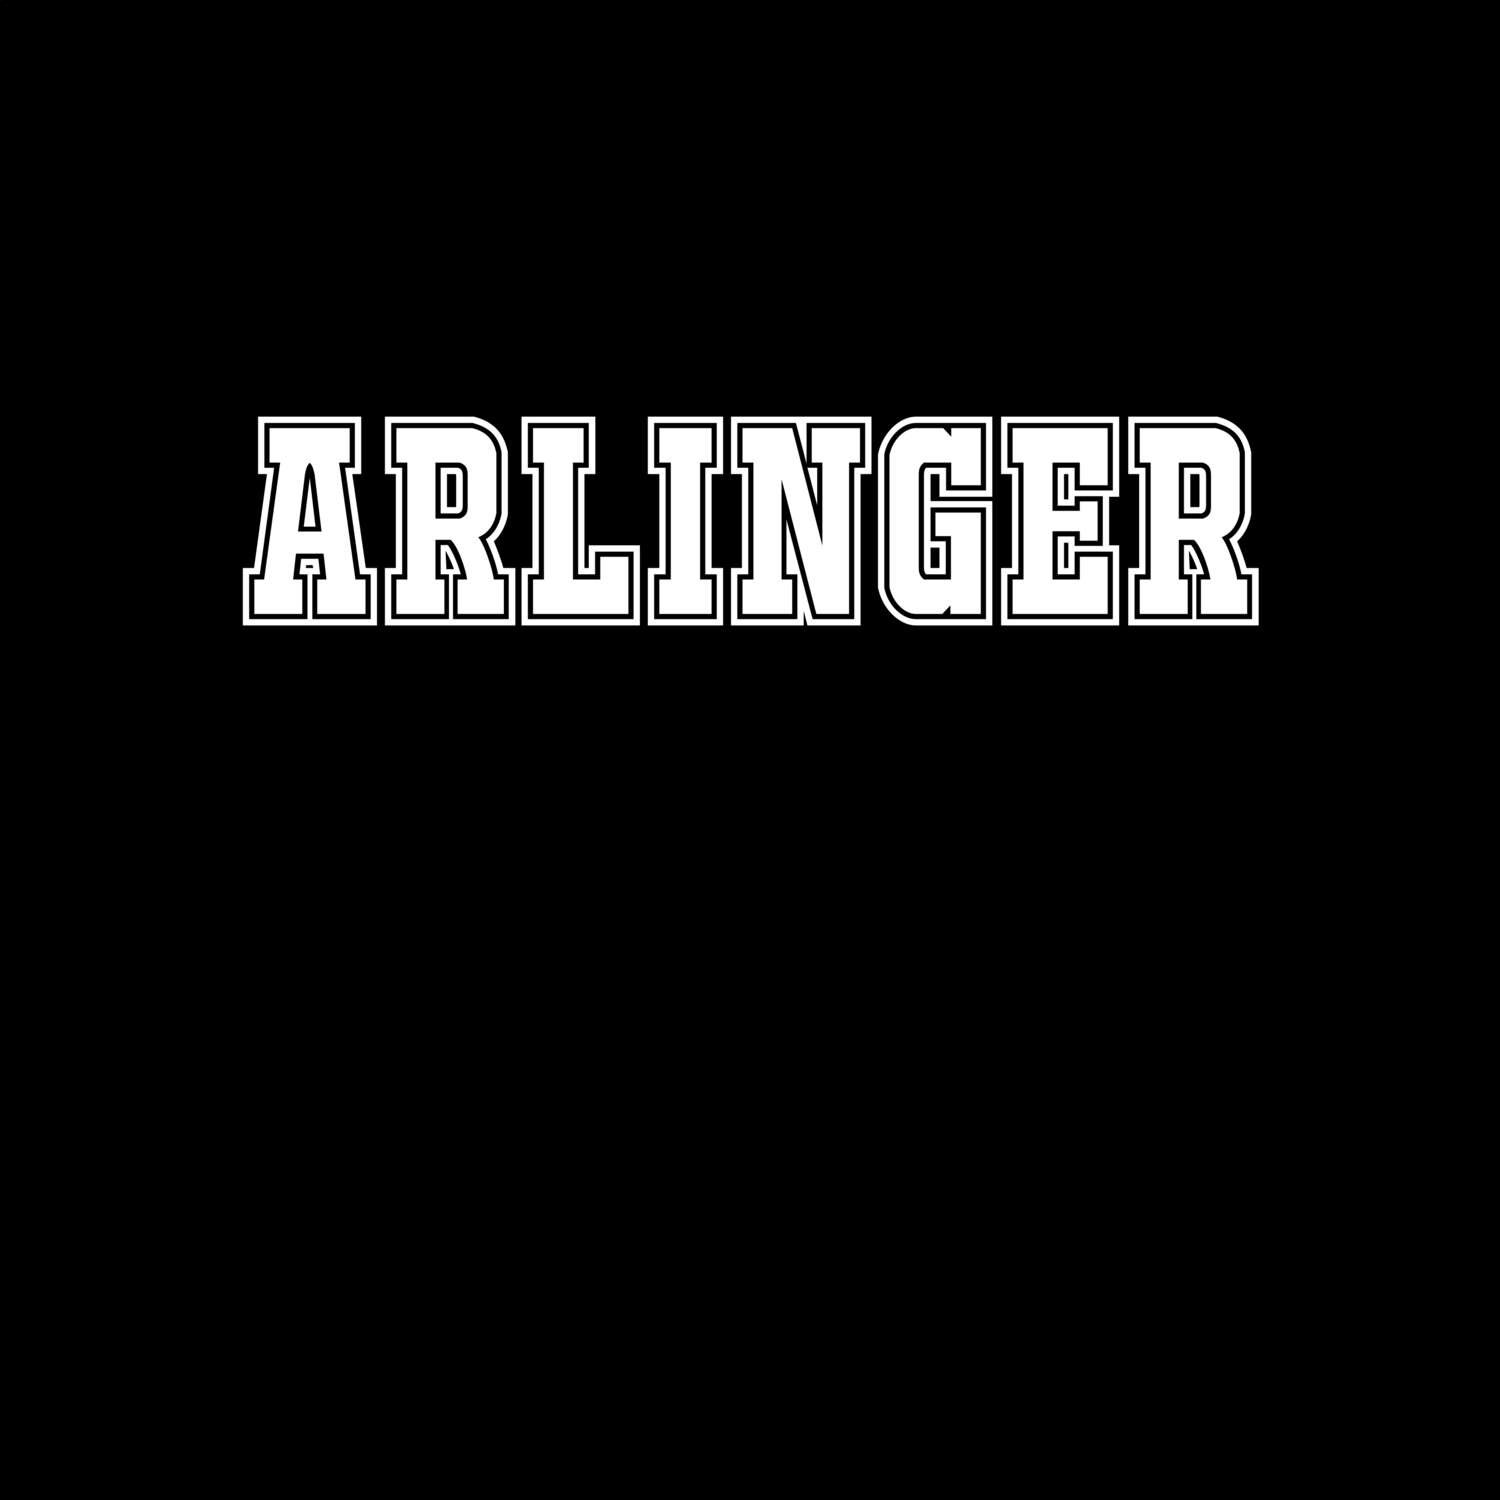 Arlinger T-Shirt »Classic«